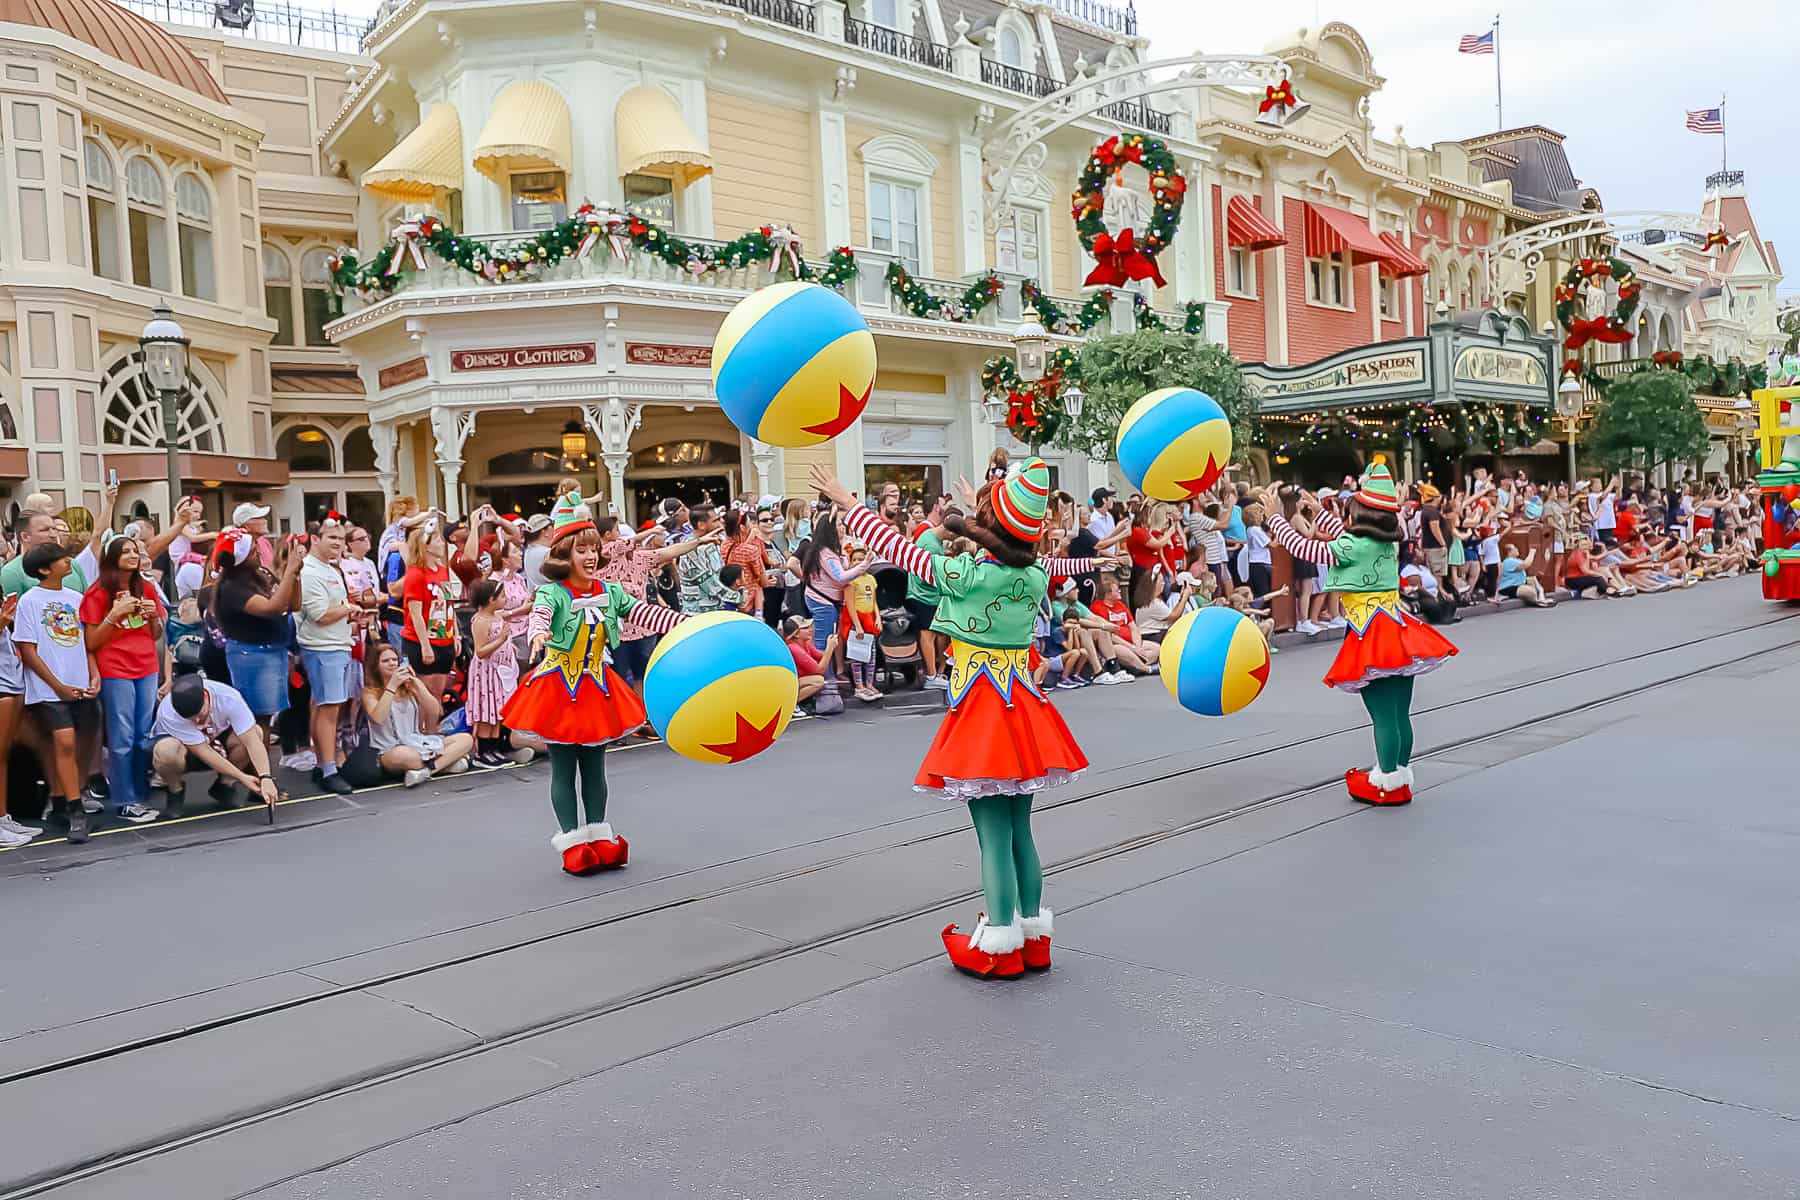 Christmas elves bouncing the balls along the parade route. 